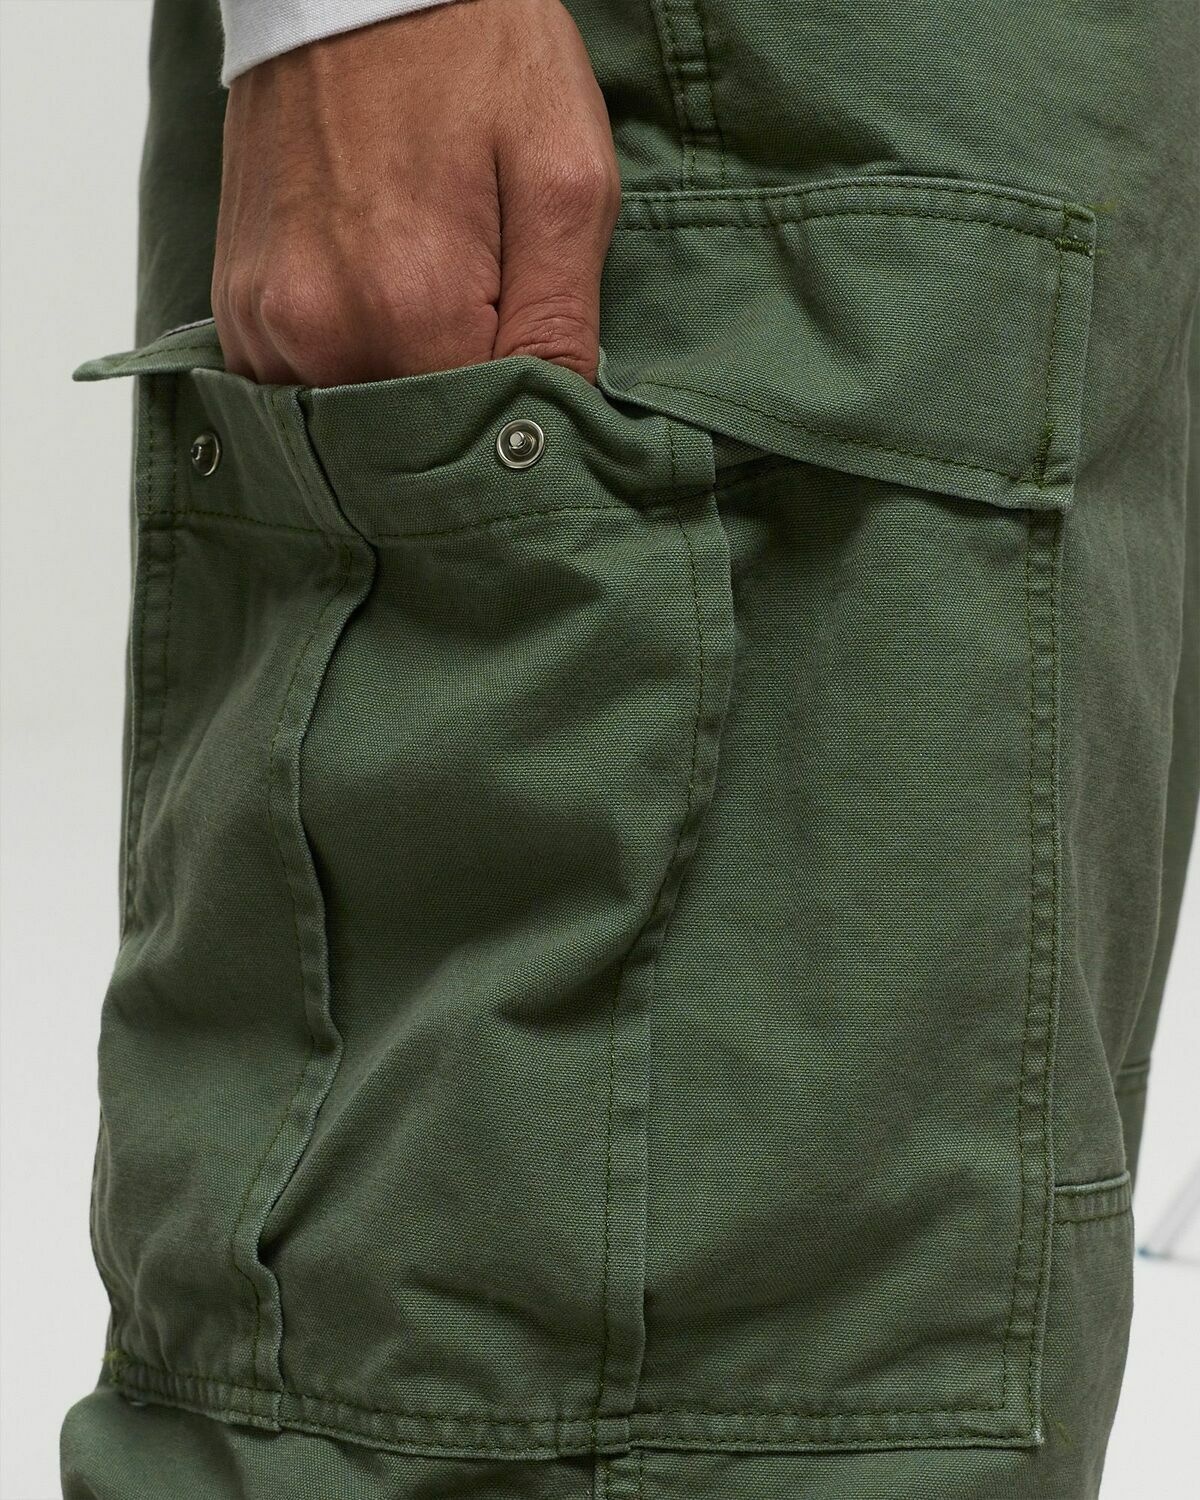 Carhartt Wip Bib Overall Brown - Mens - Casual Pants Carhartt WIP